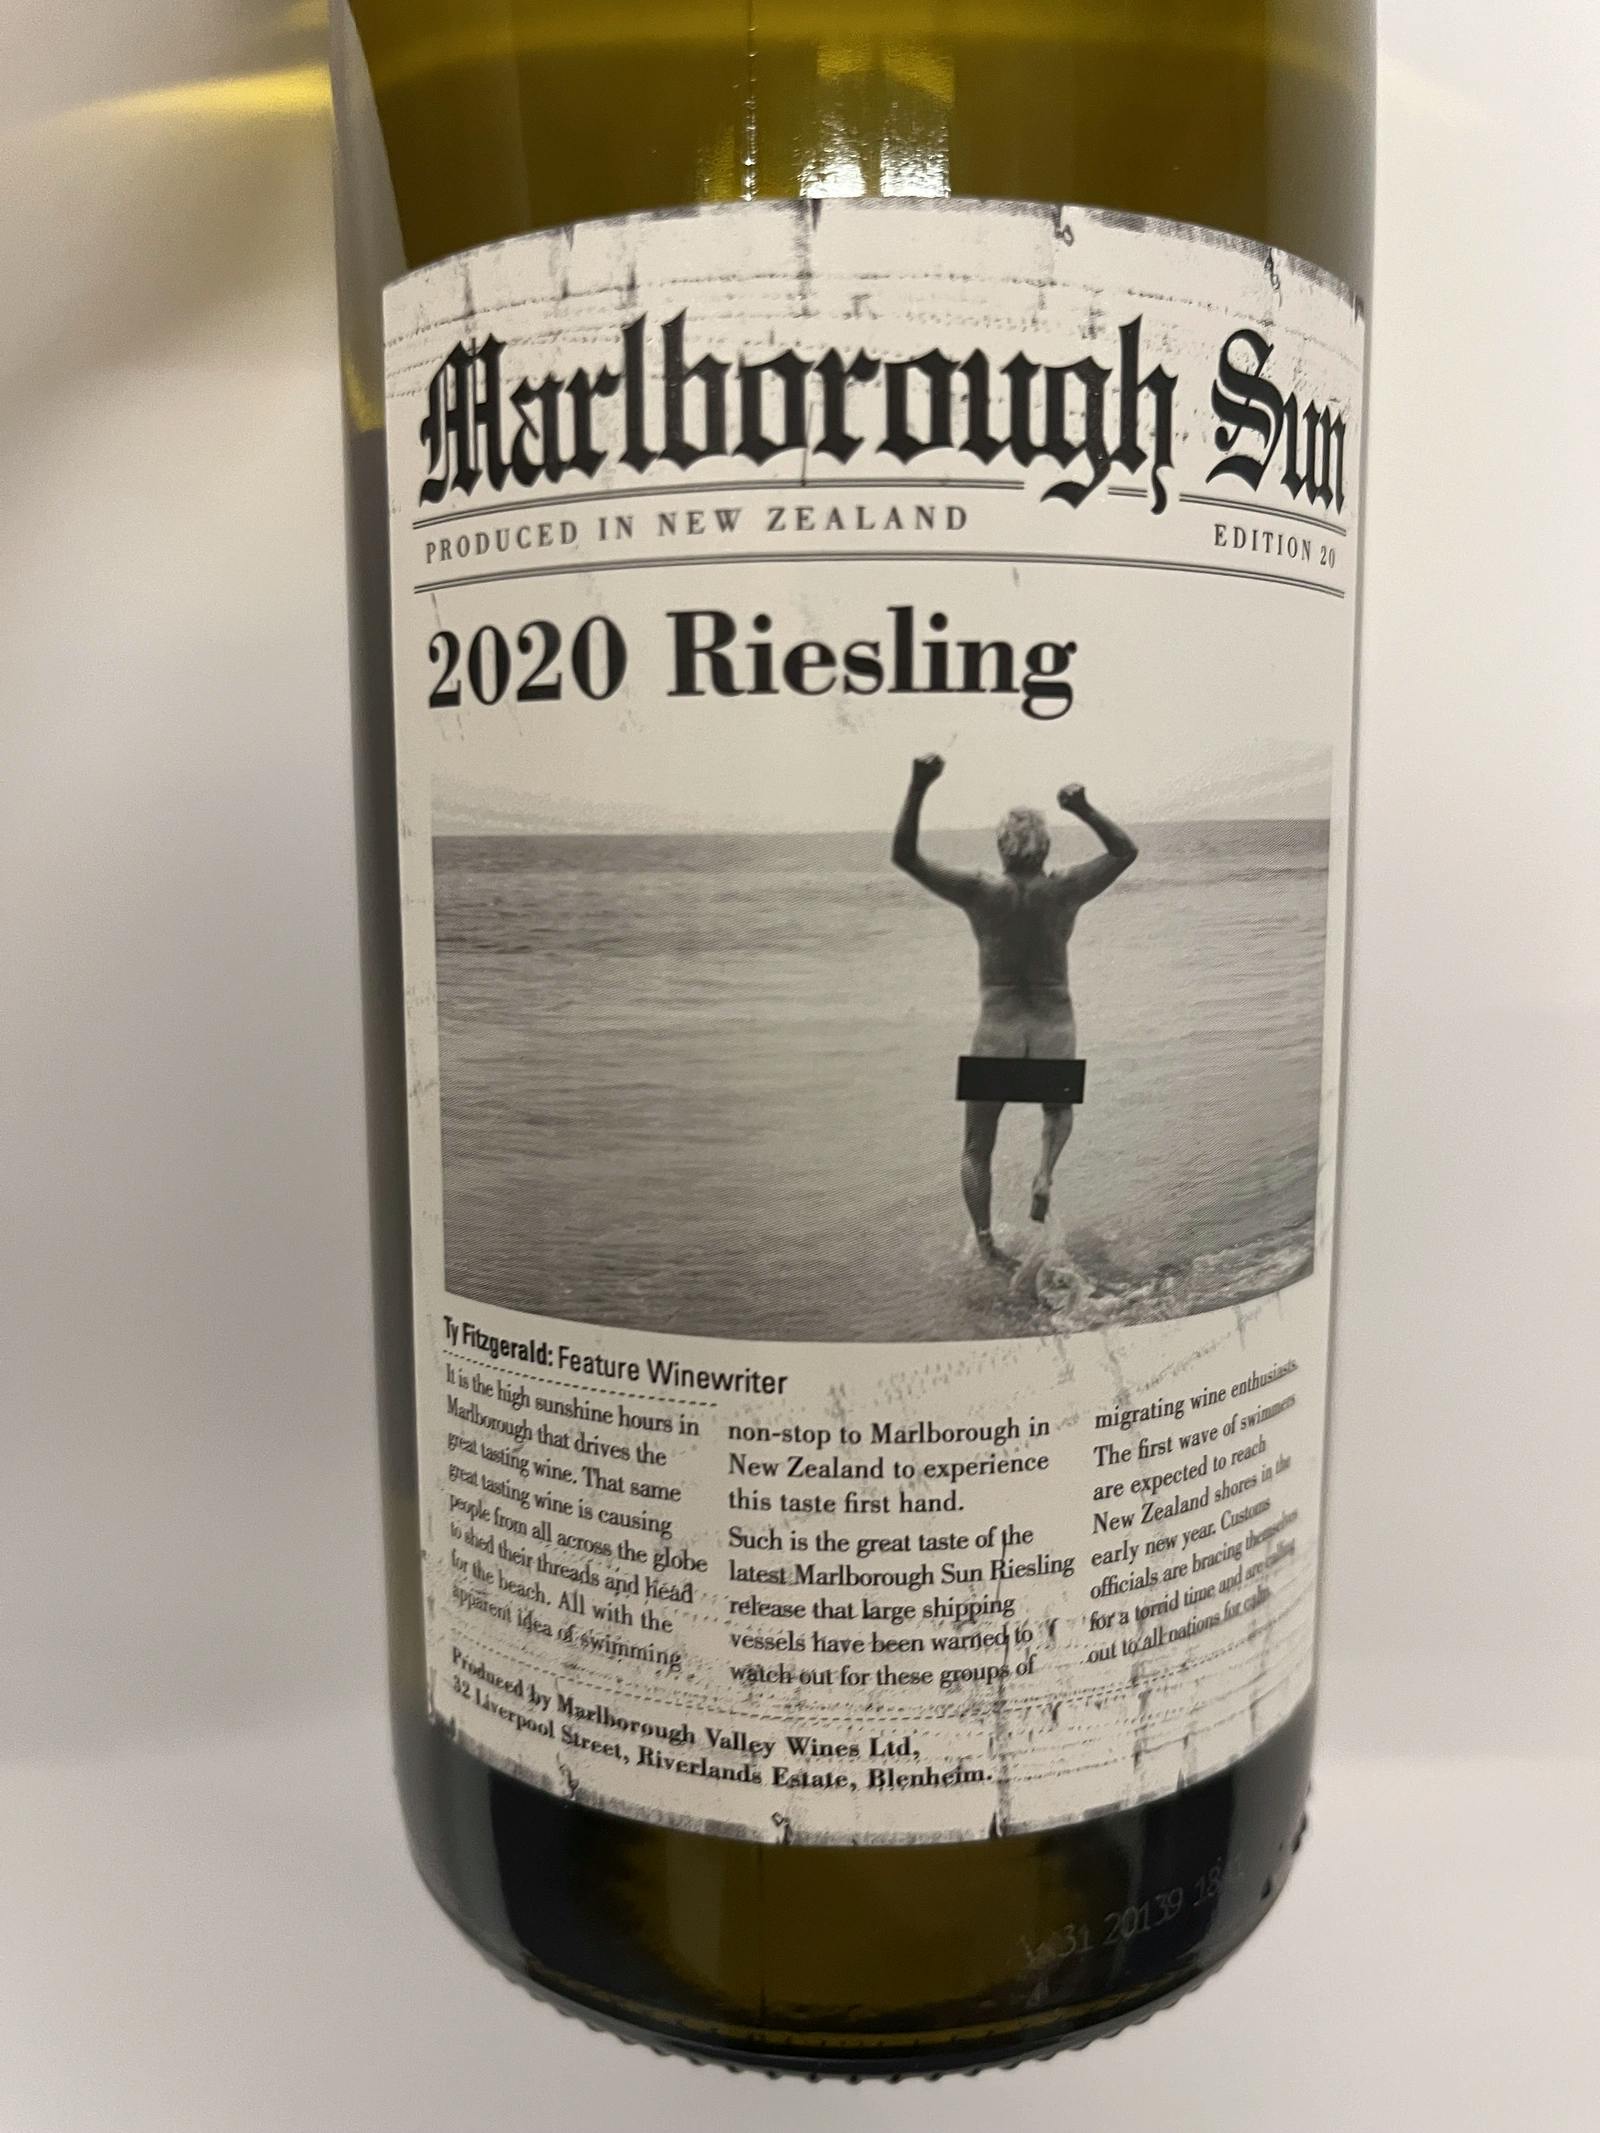 Marlborough Sun Riesling 2020